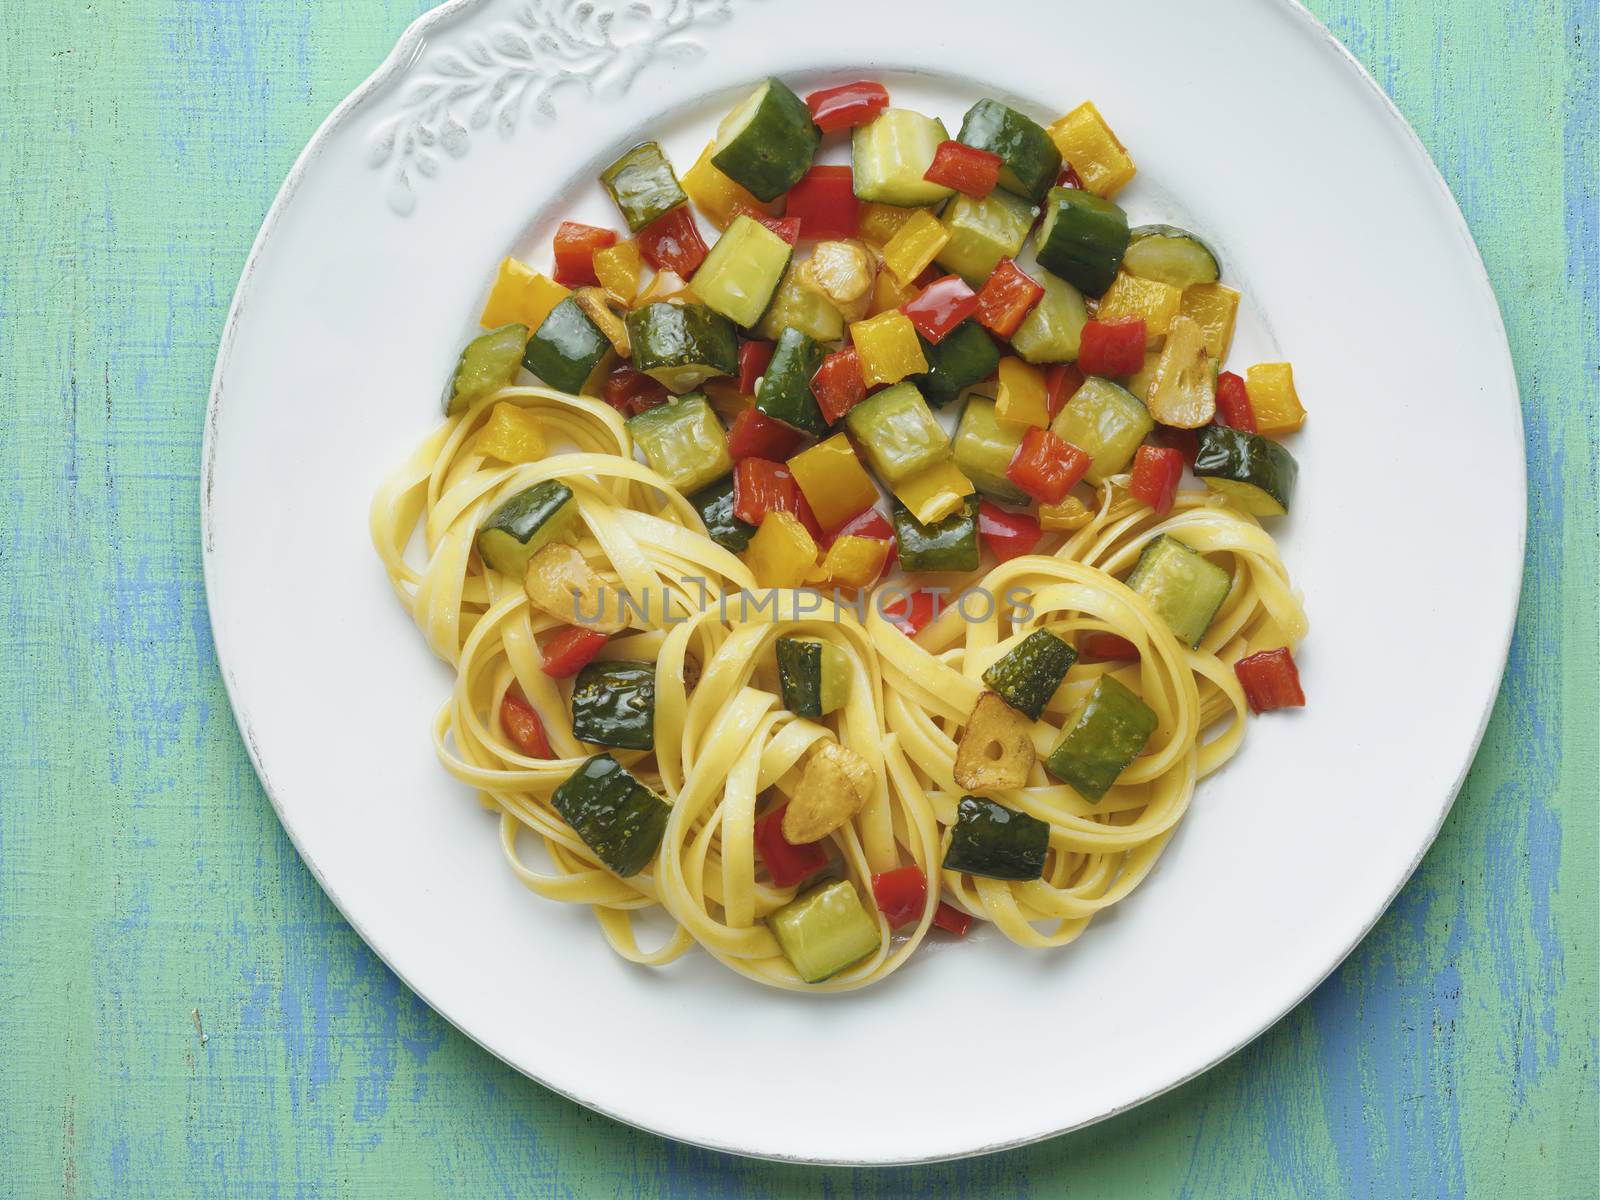 rustic  healthy italian pasta primavera by zkruger